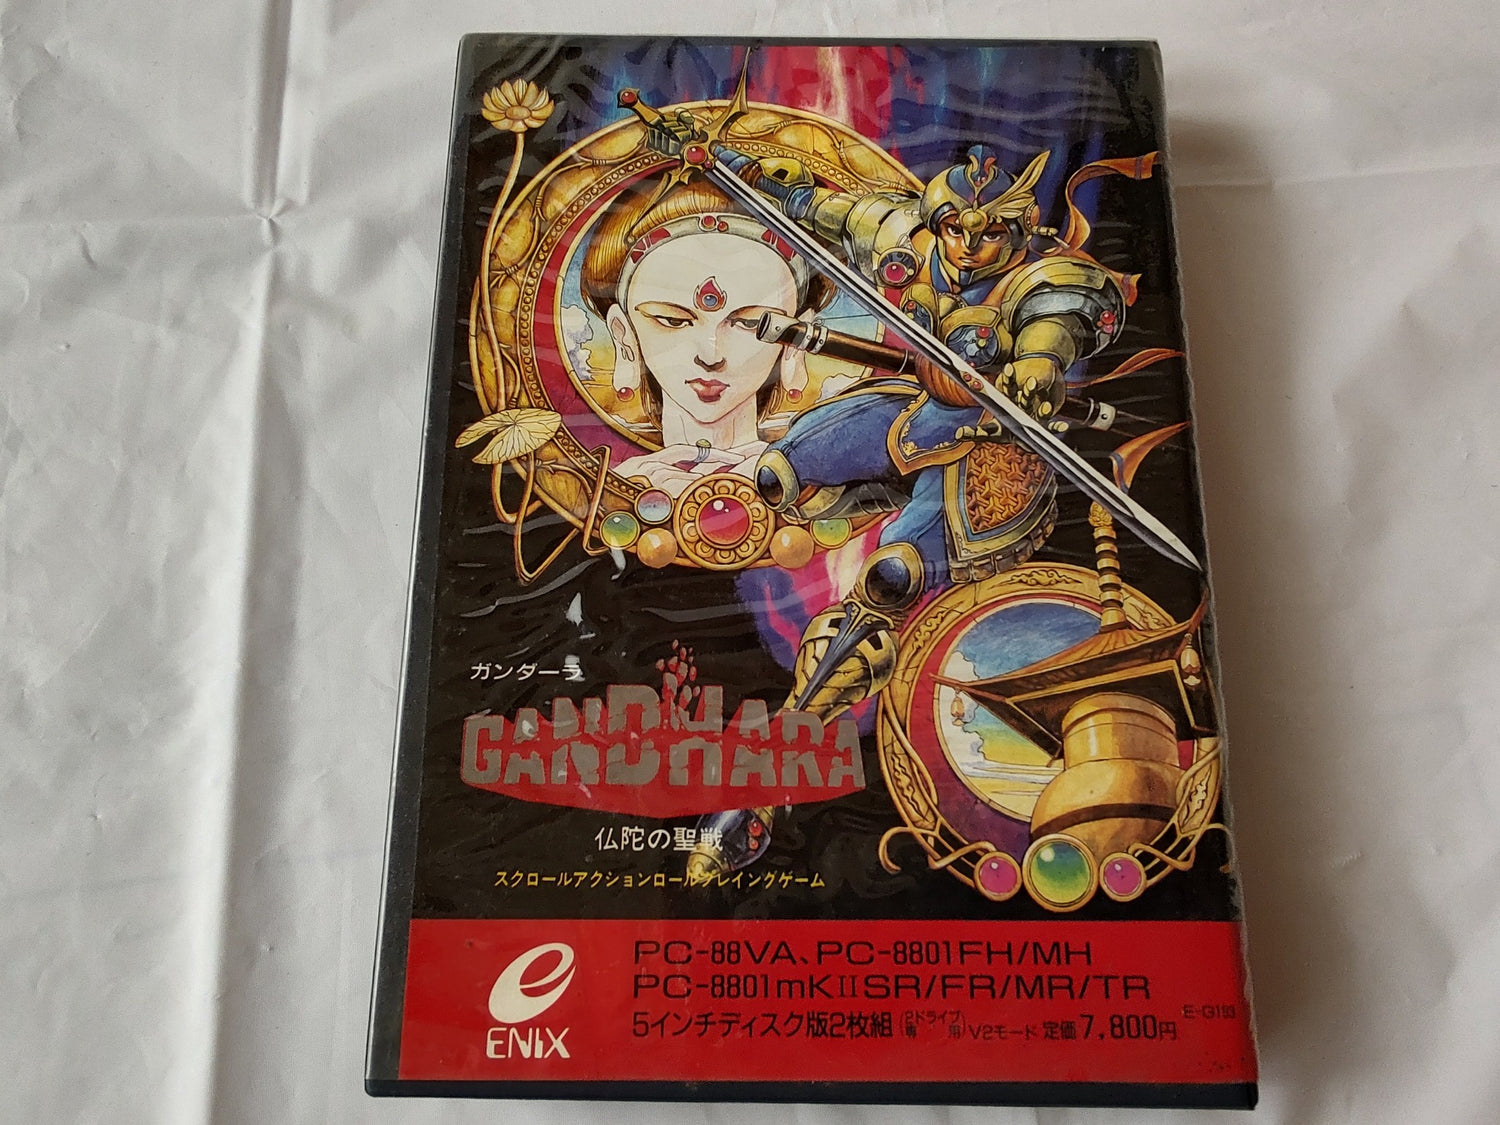 PC8801 ガンダーラ - テレビゲーム